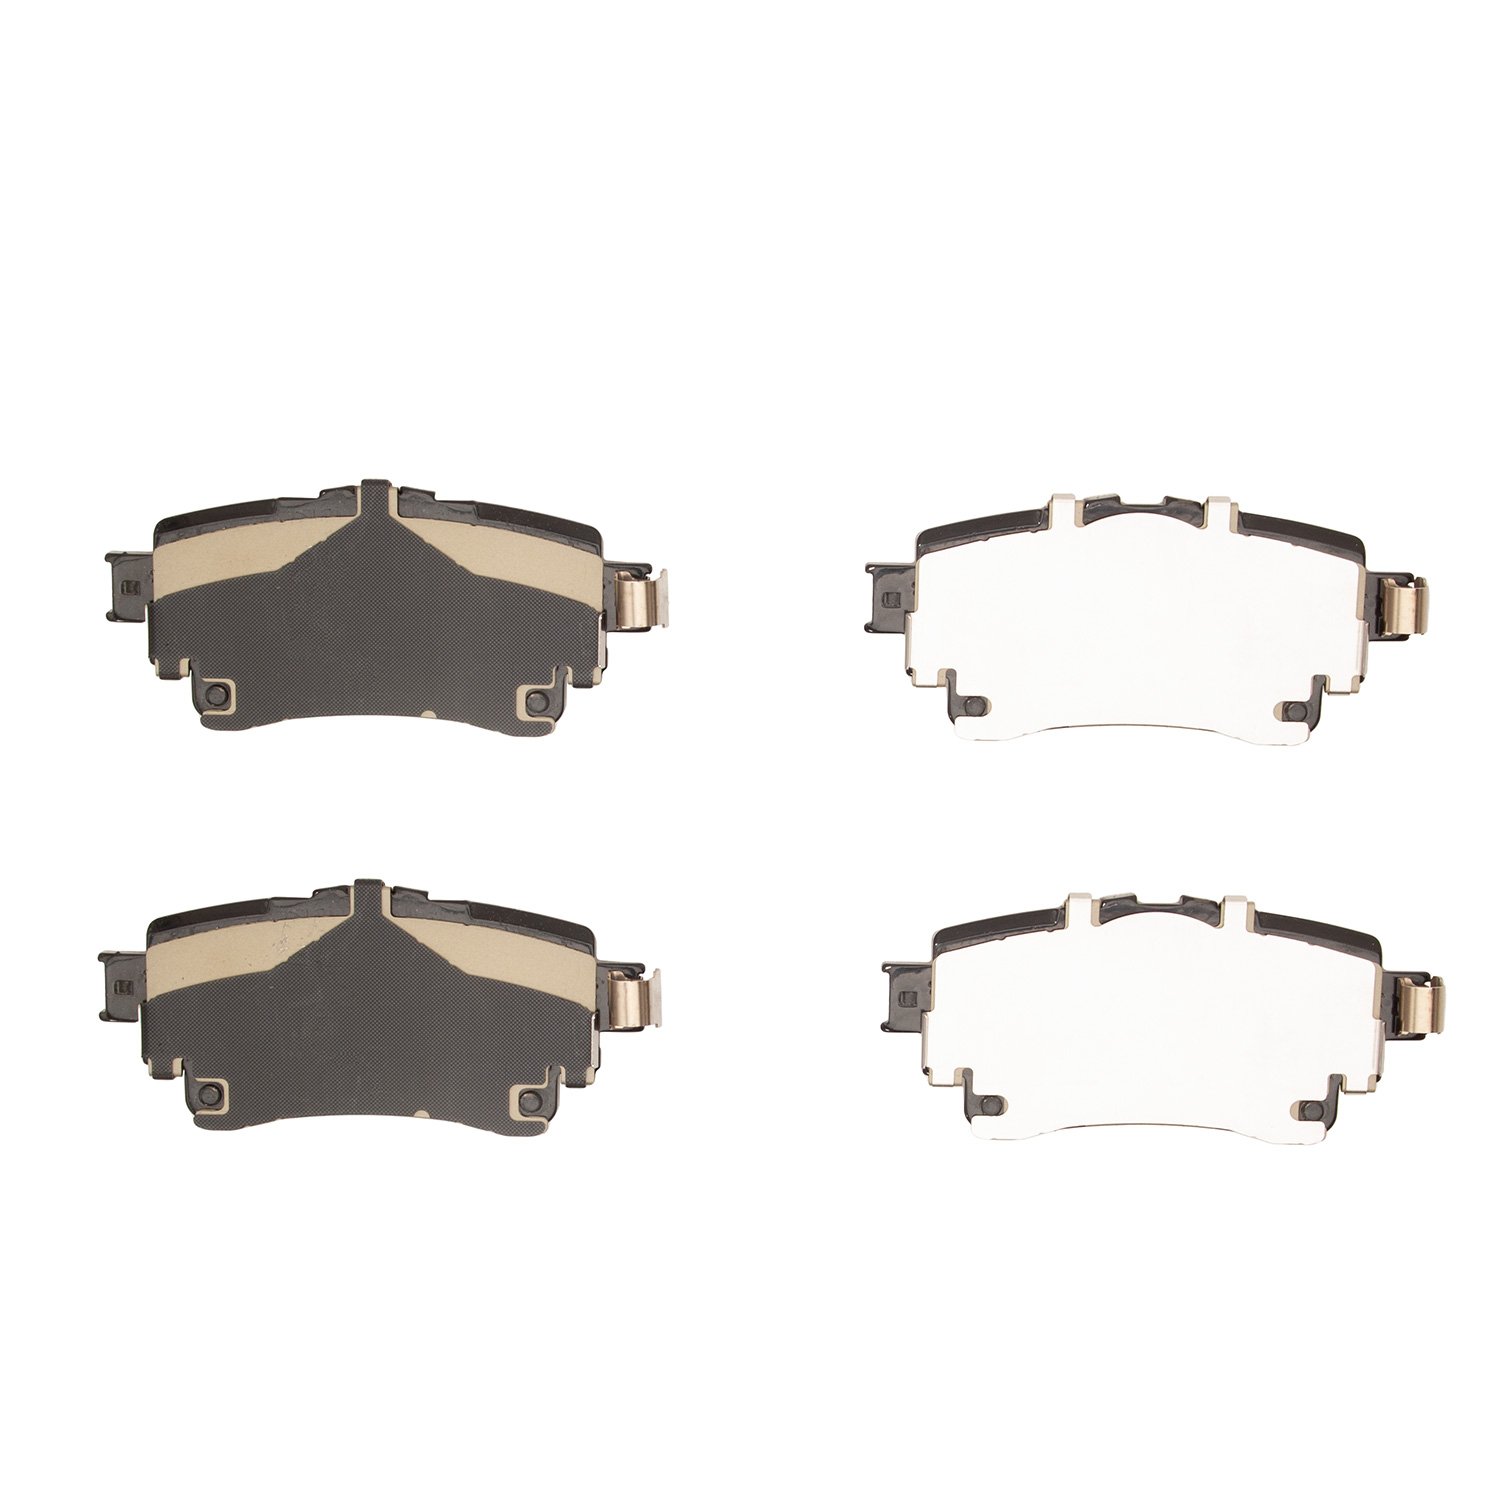 1551-2305-00 5000 Advanced Ceramic Brake Pads, Fits Select Multiple Makes/Models, Position: Rear